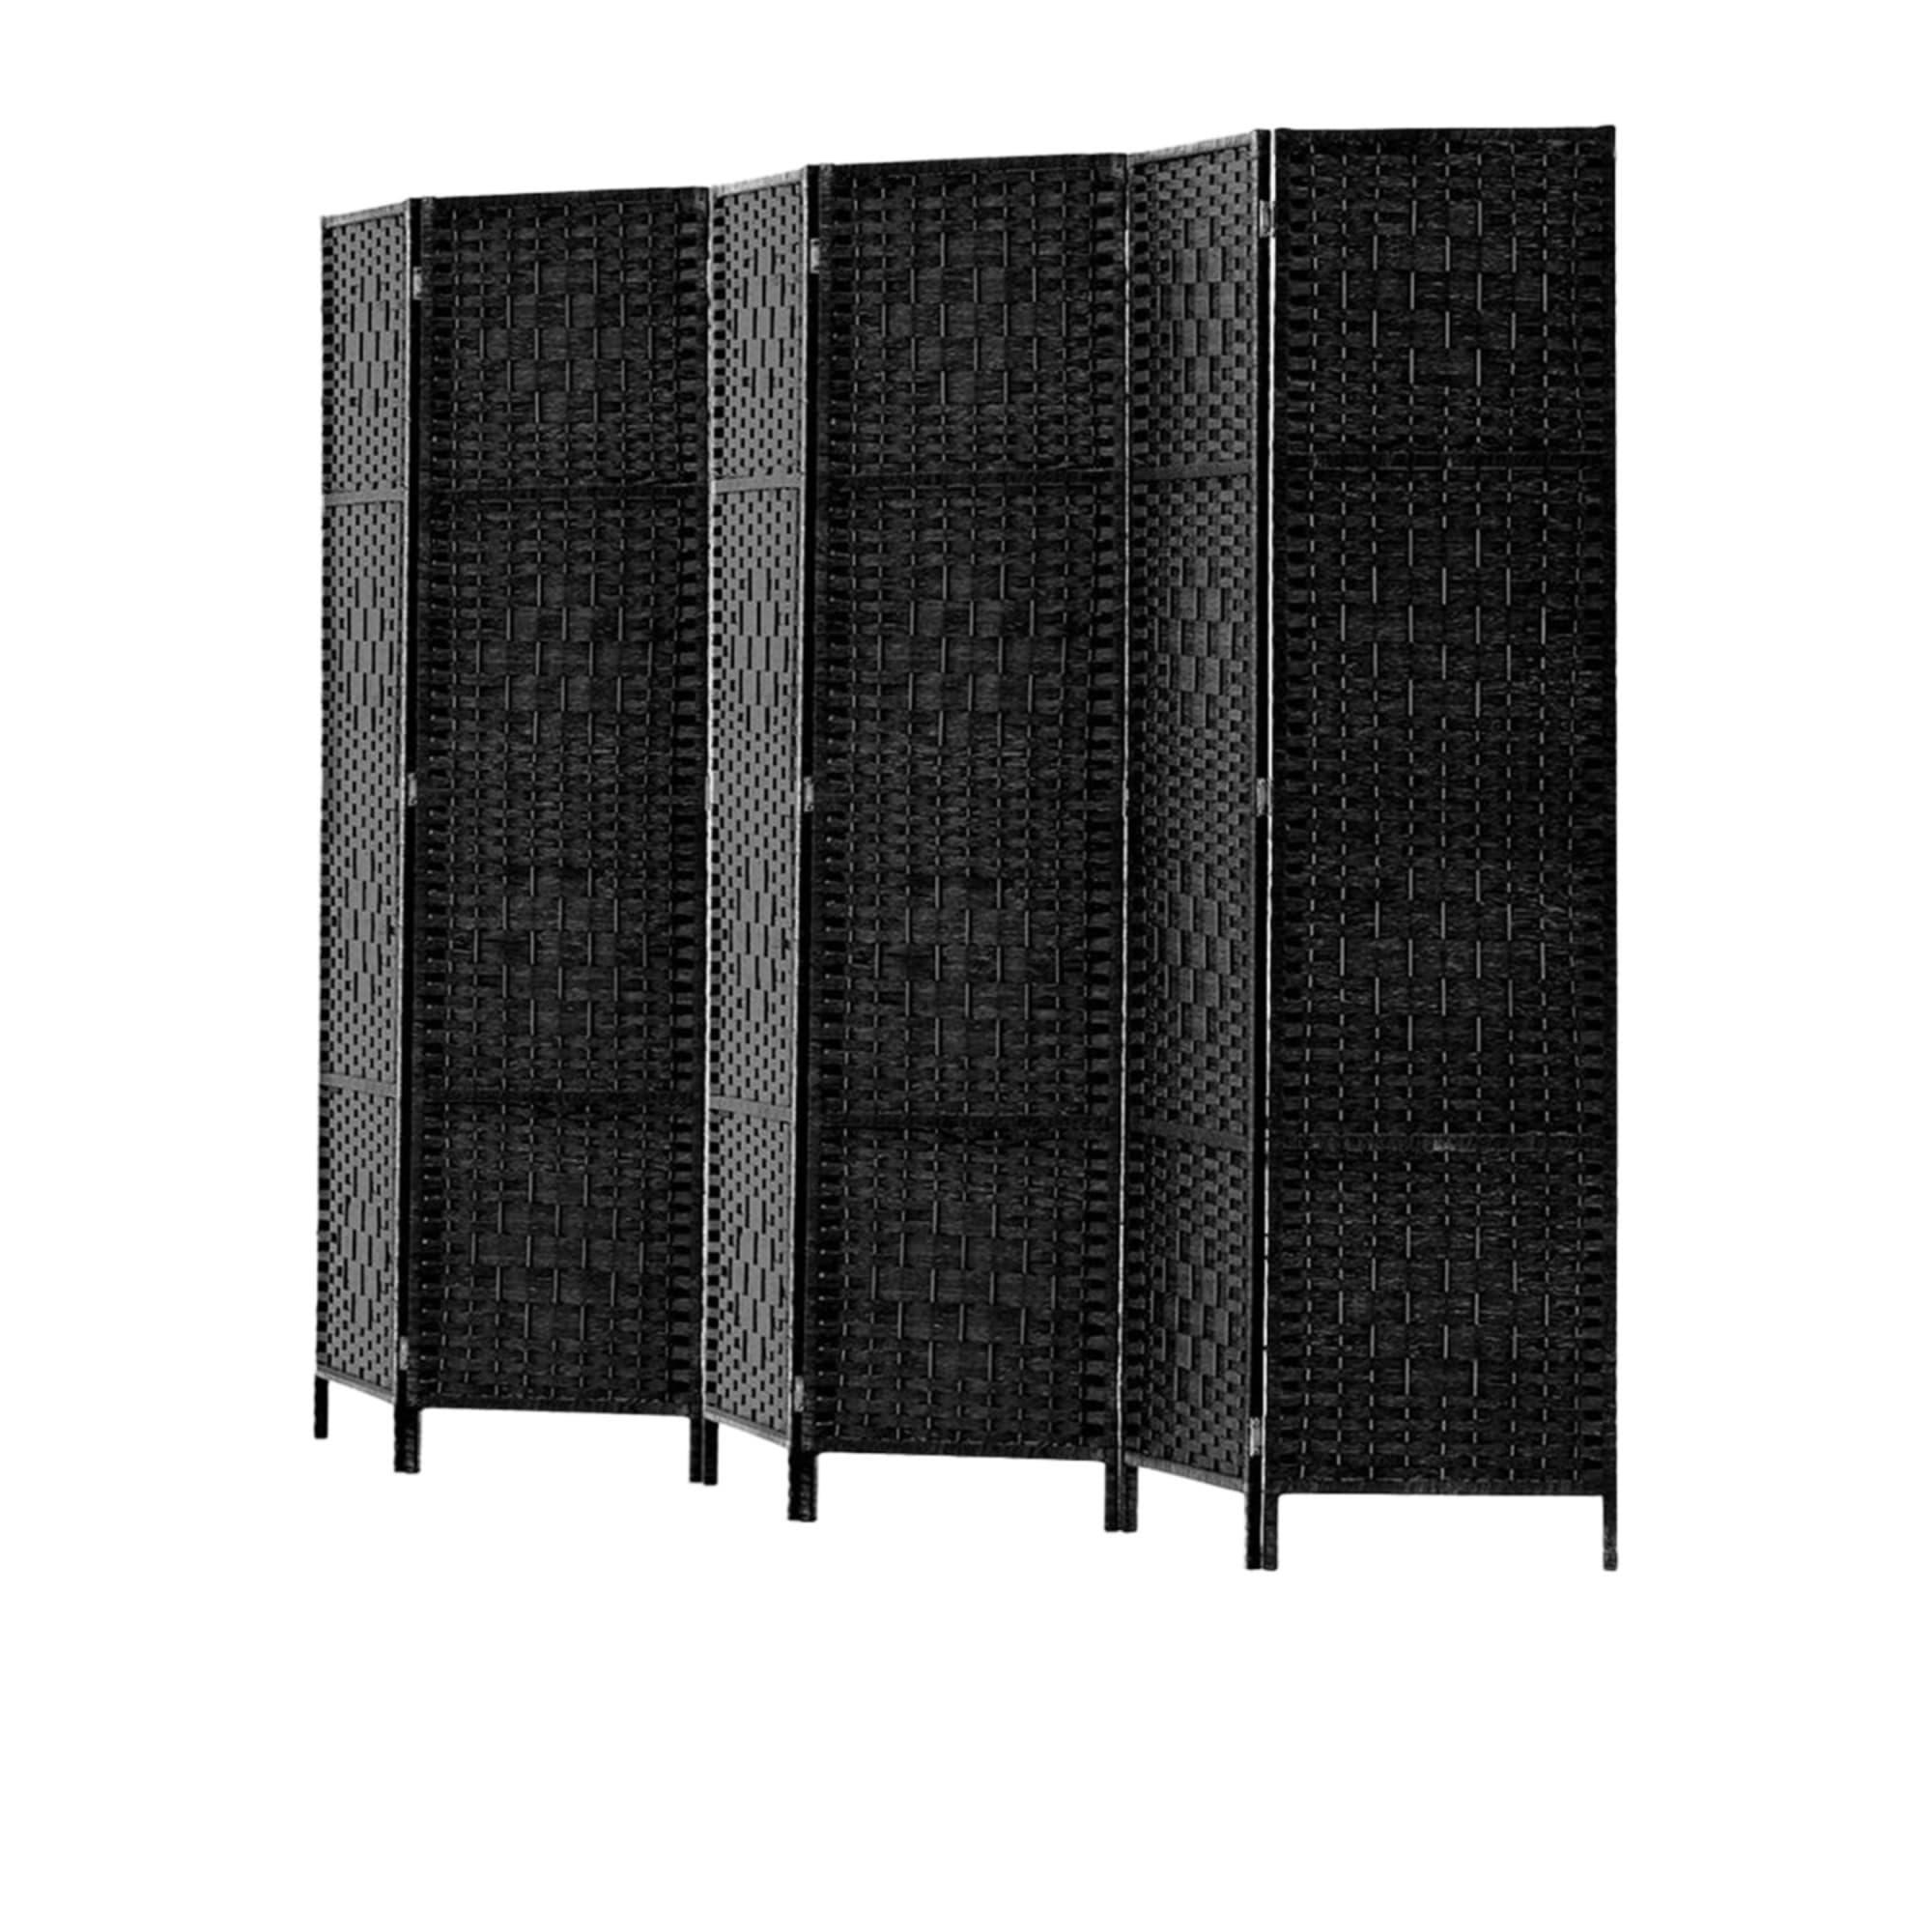 Artiss 6 Panel Rattan Room Divider Black Image 3